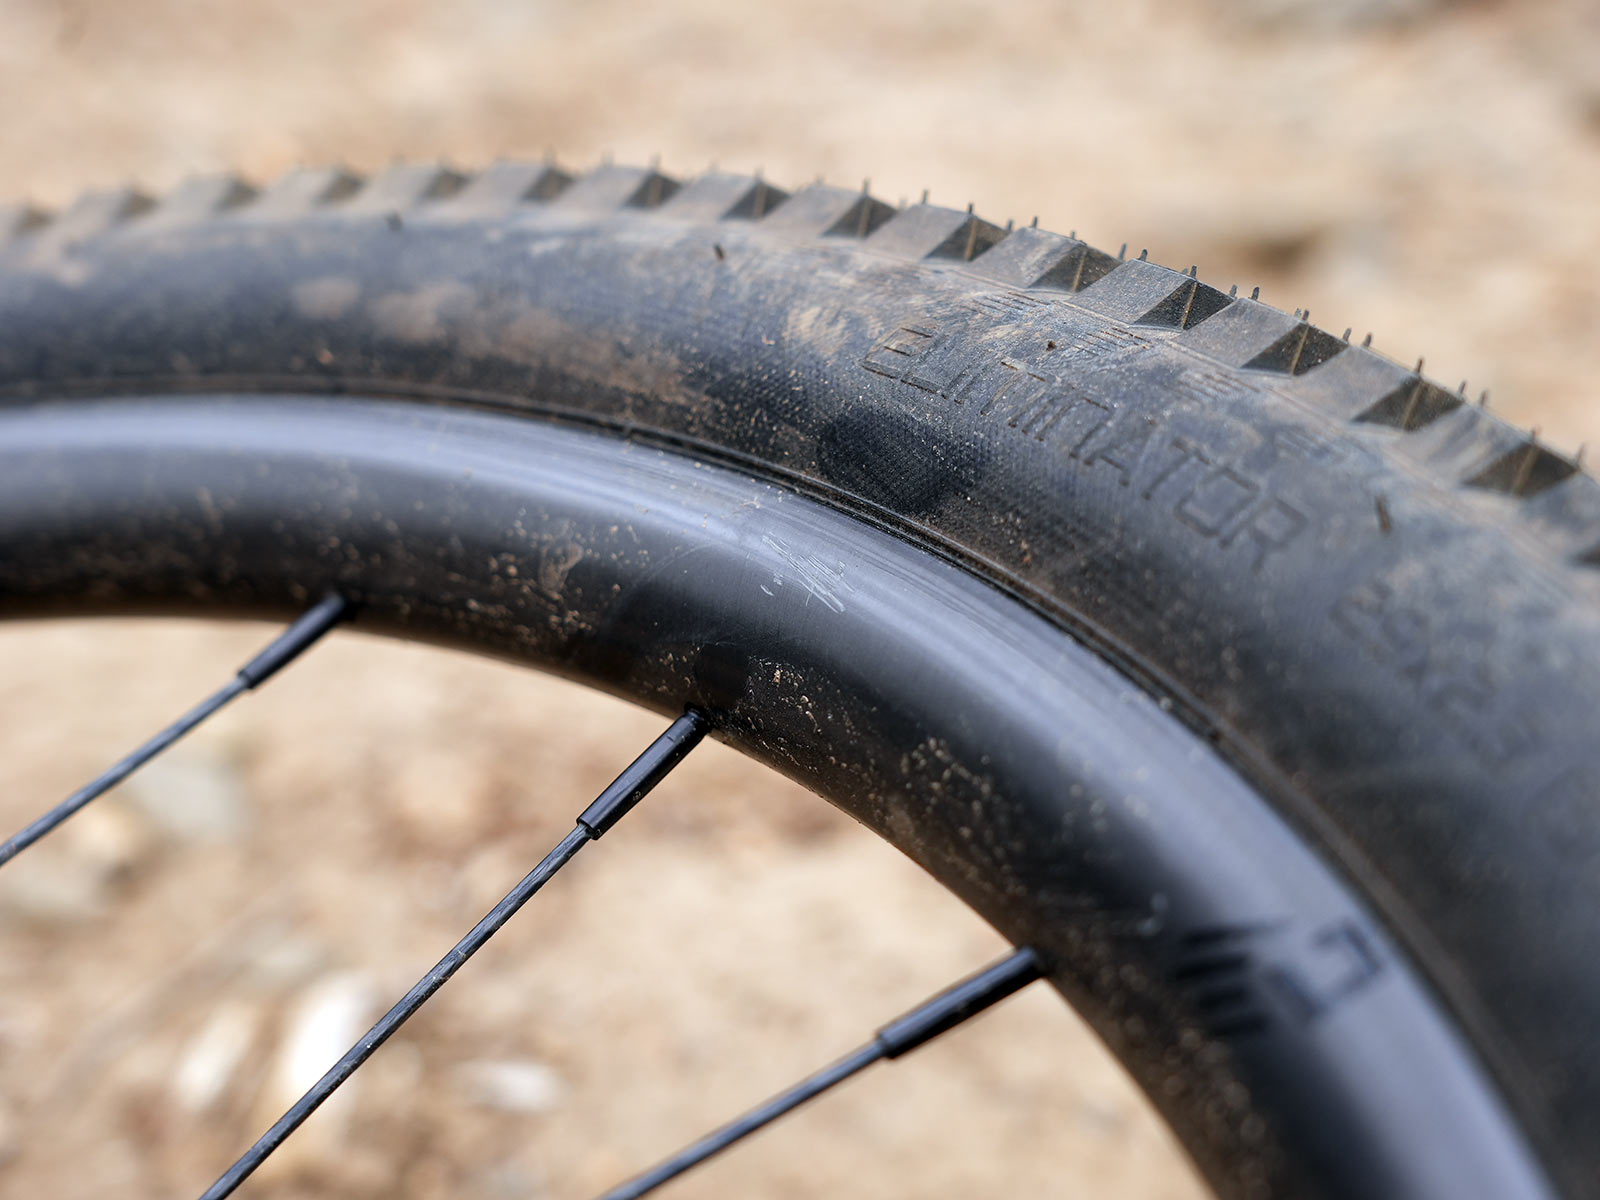 closeup detail of Gulo Composites carbon fiber mountain bike rim